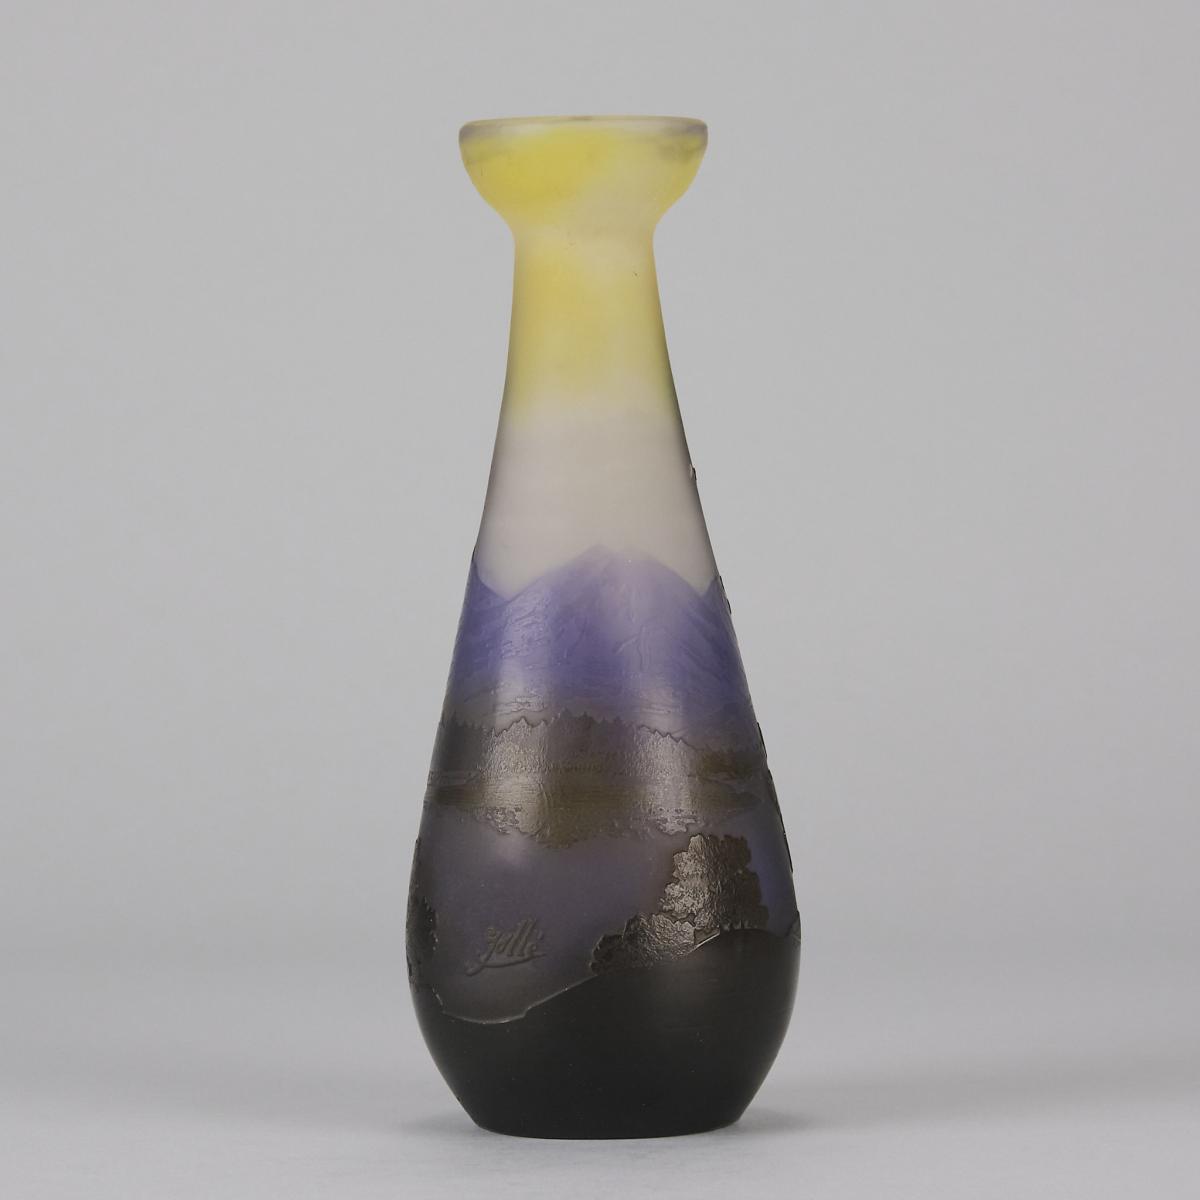 Art Nouveau cameo glass vase entitled "Slender Landscape Vase" by Gallé - Cicra 1900